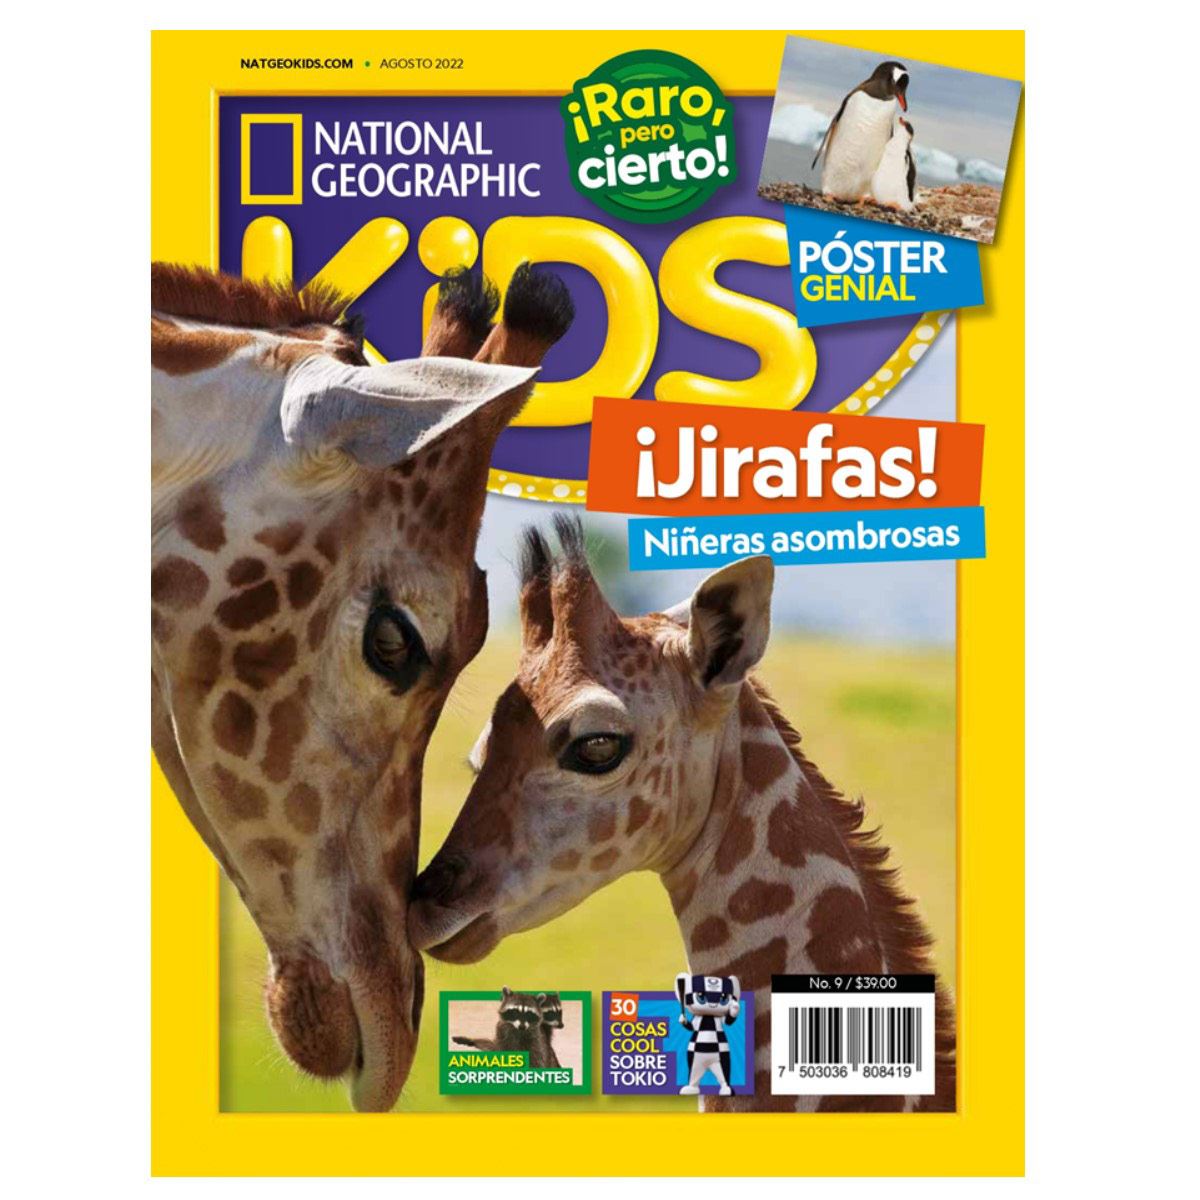 National Geographic Kids N.13 Panini Revista NatGeo Kids